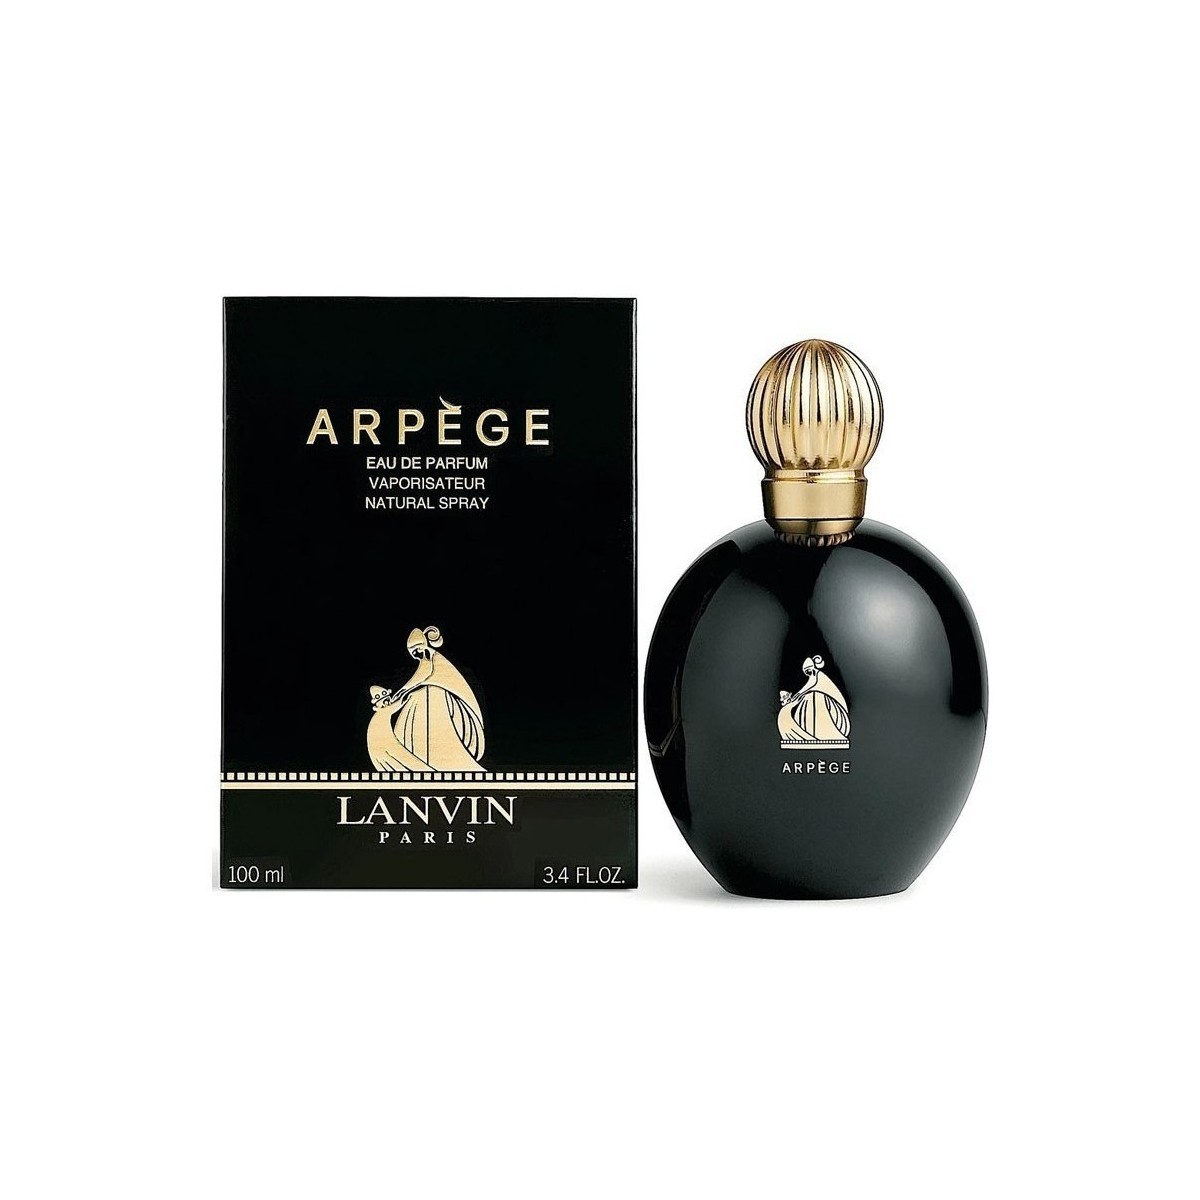 Beauty Damen Eau de parfum  Lanvin Arpege - Parfüm - 100ml - VERDAMPFER Arpege - perfume - 100ml - spray